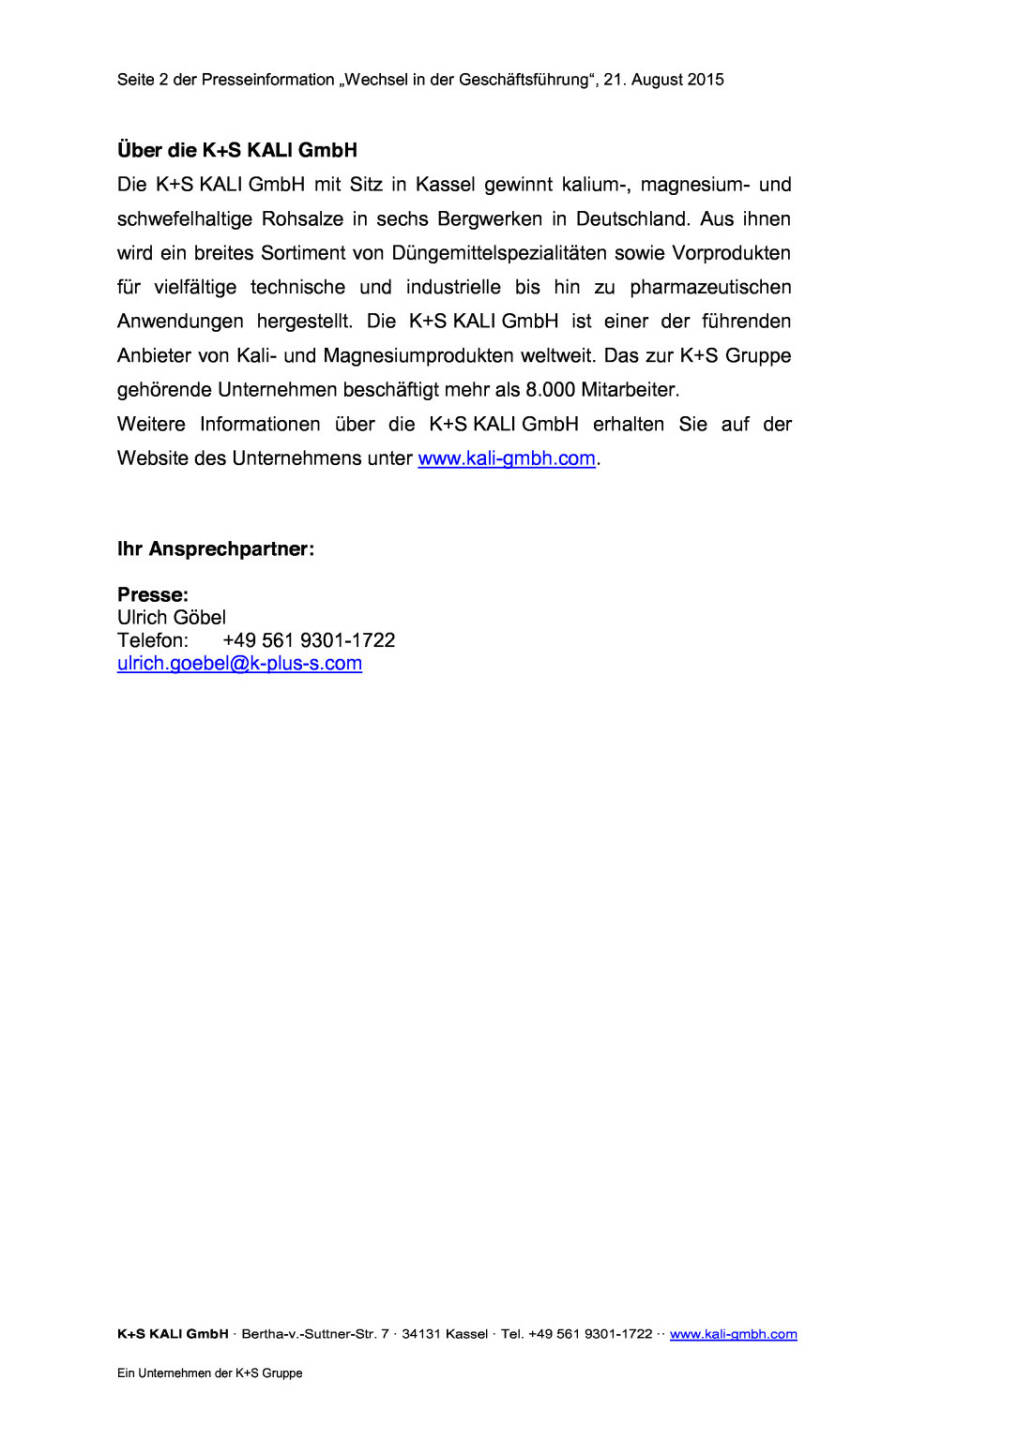 K+S Kali GmbH: Wechsel in der Geschäftsführung, Seite 2/2, komplettes Dokument unter http://boerse-social.com/static/uploads/file_304_ks_kali_gmbh_wechsel_in_der_geschäftsführung.pdf